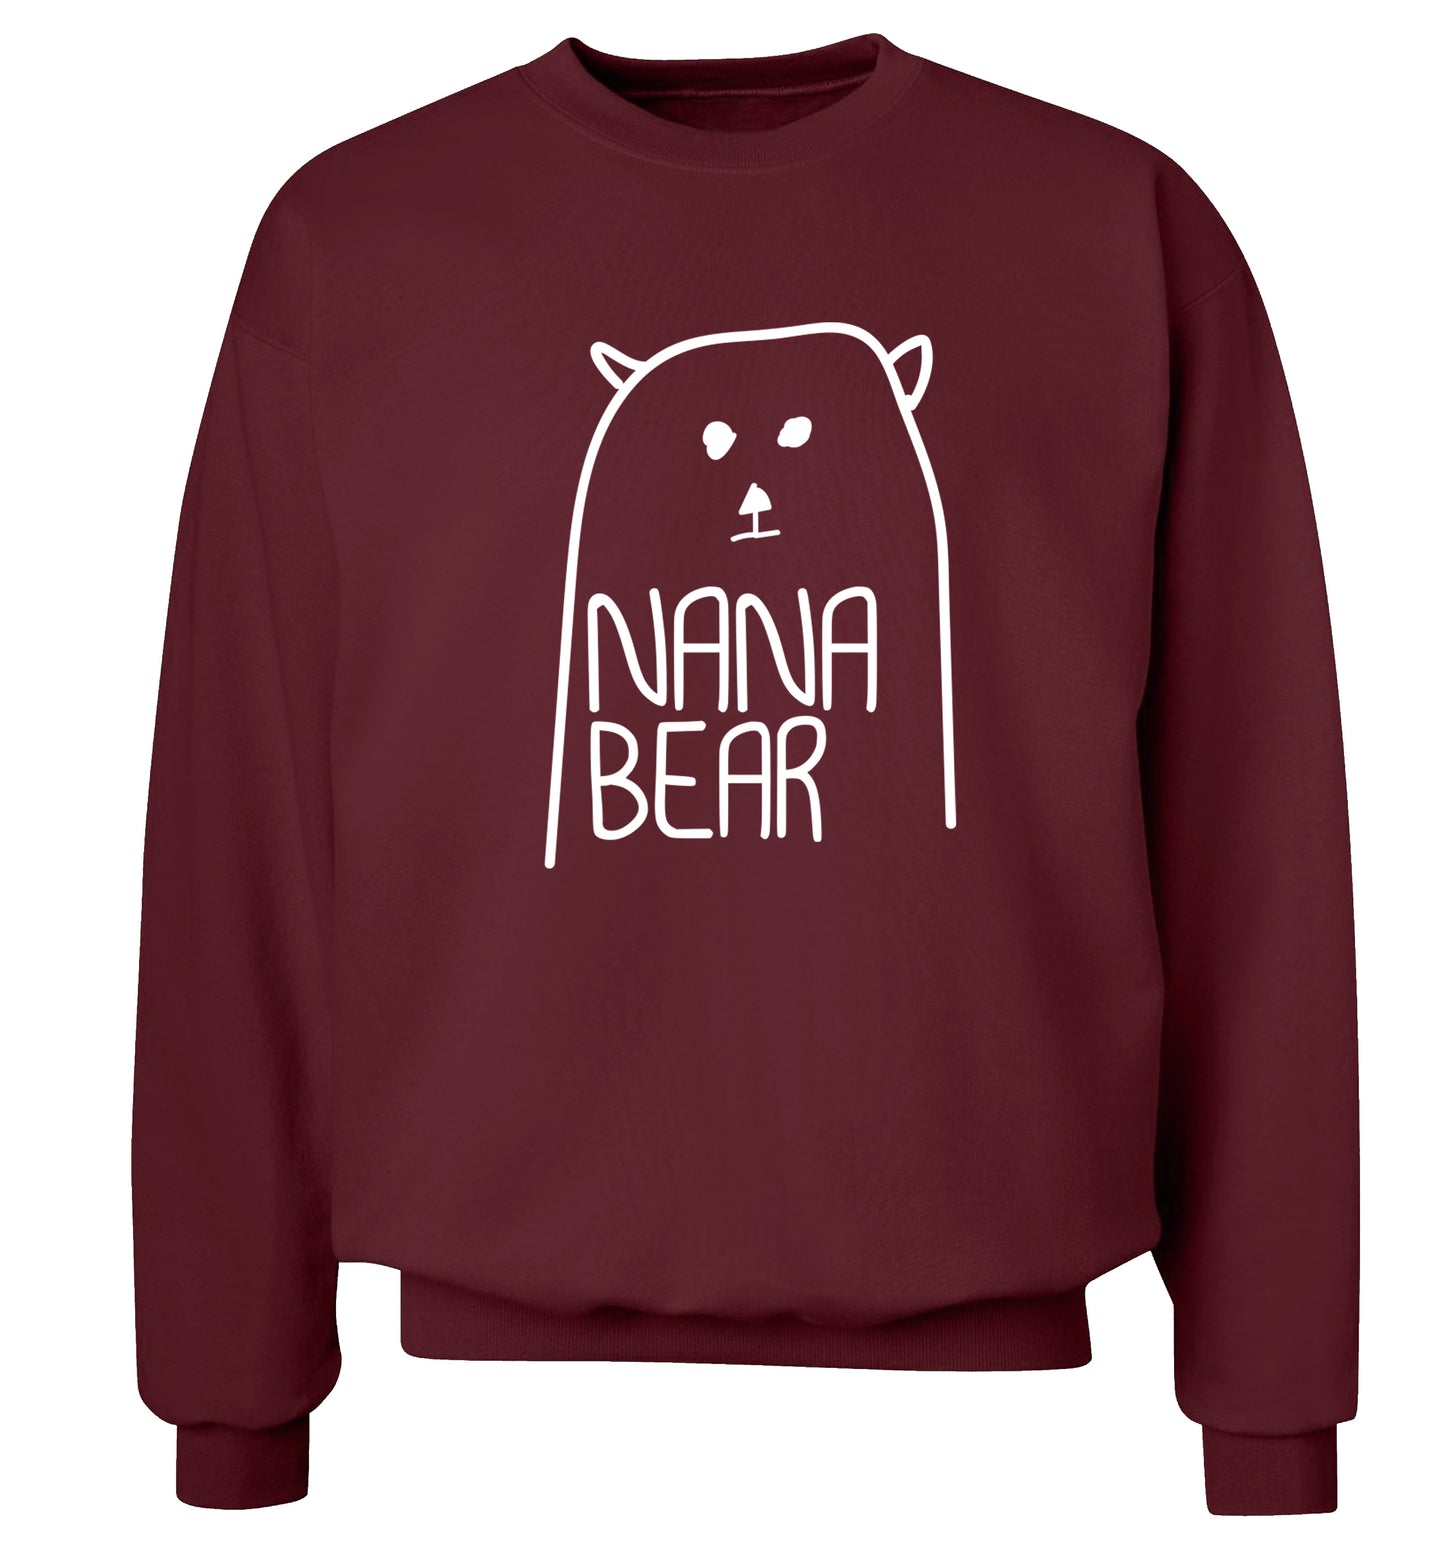 Nana bear Adult's unisex maroon Sweater 2XL